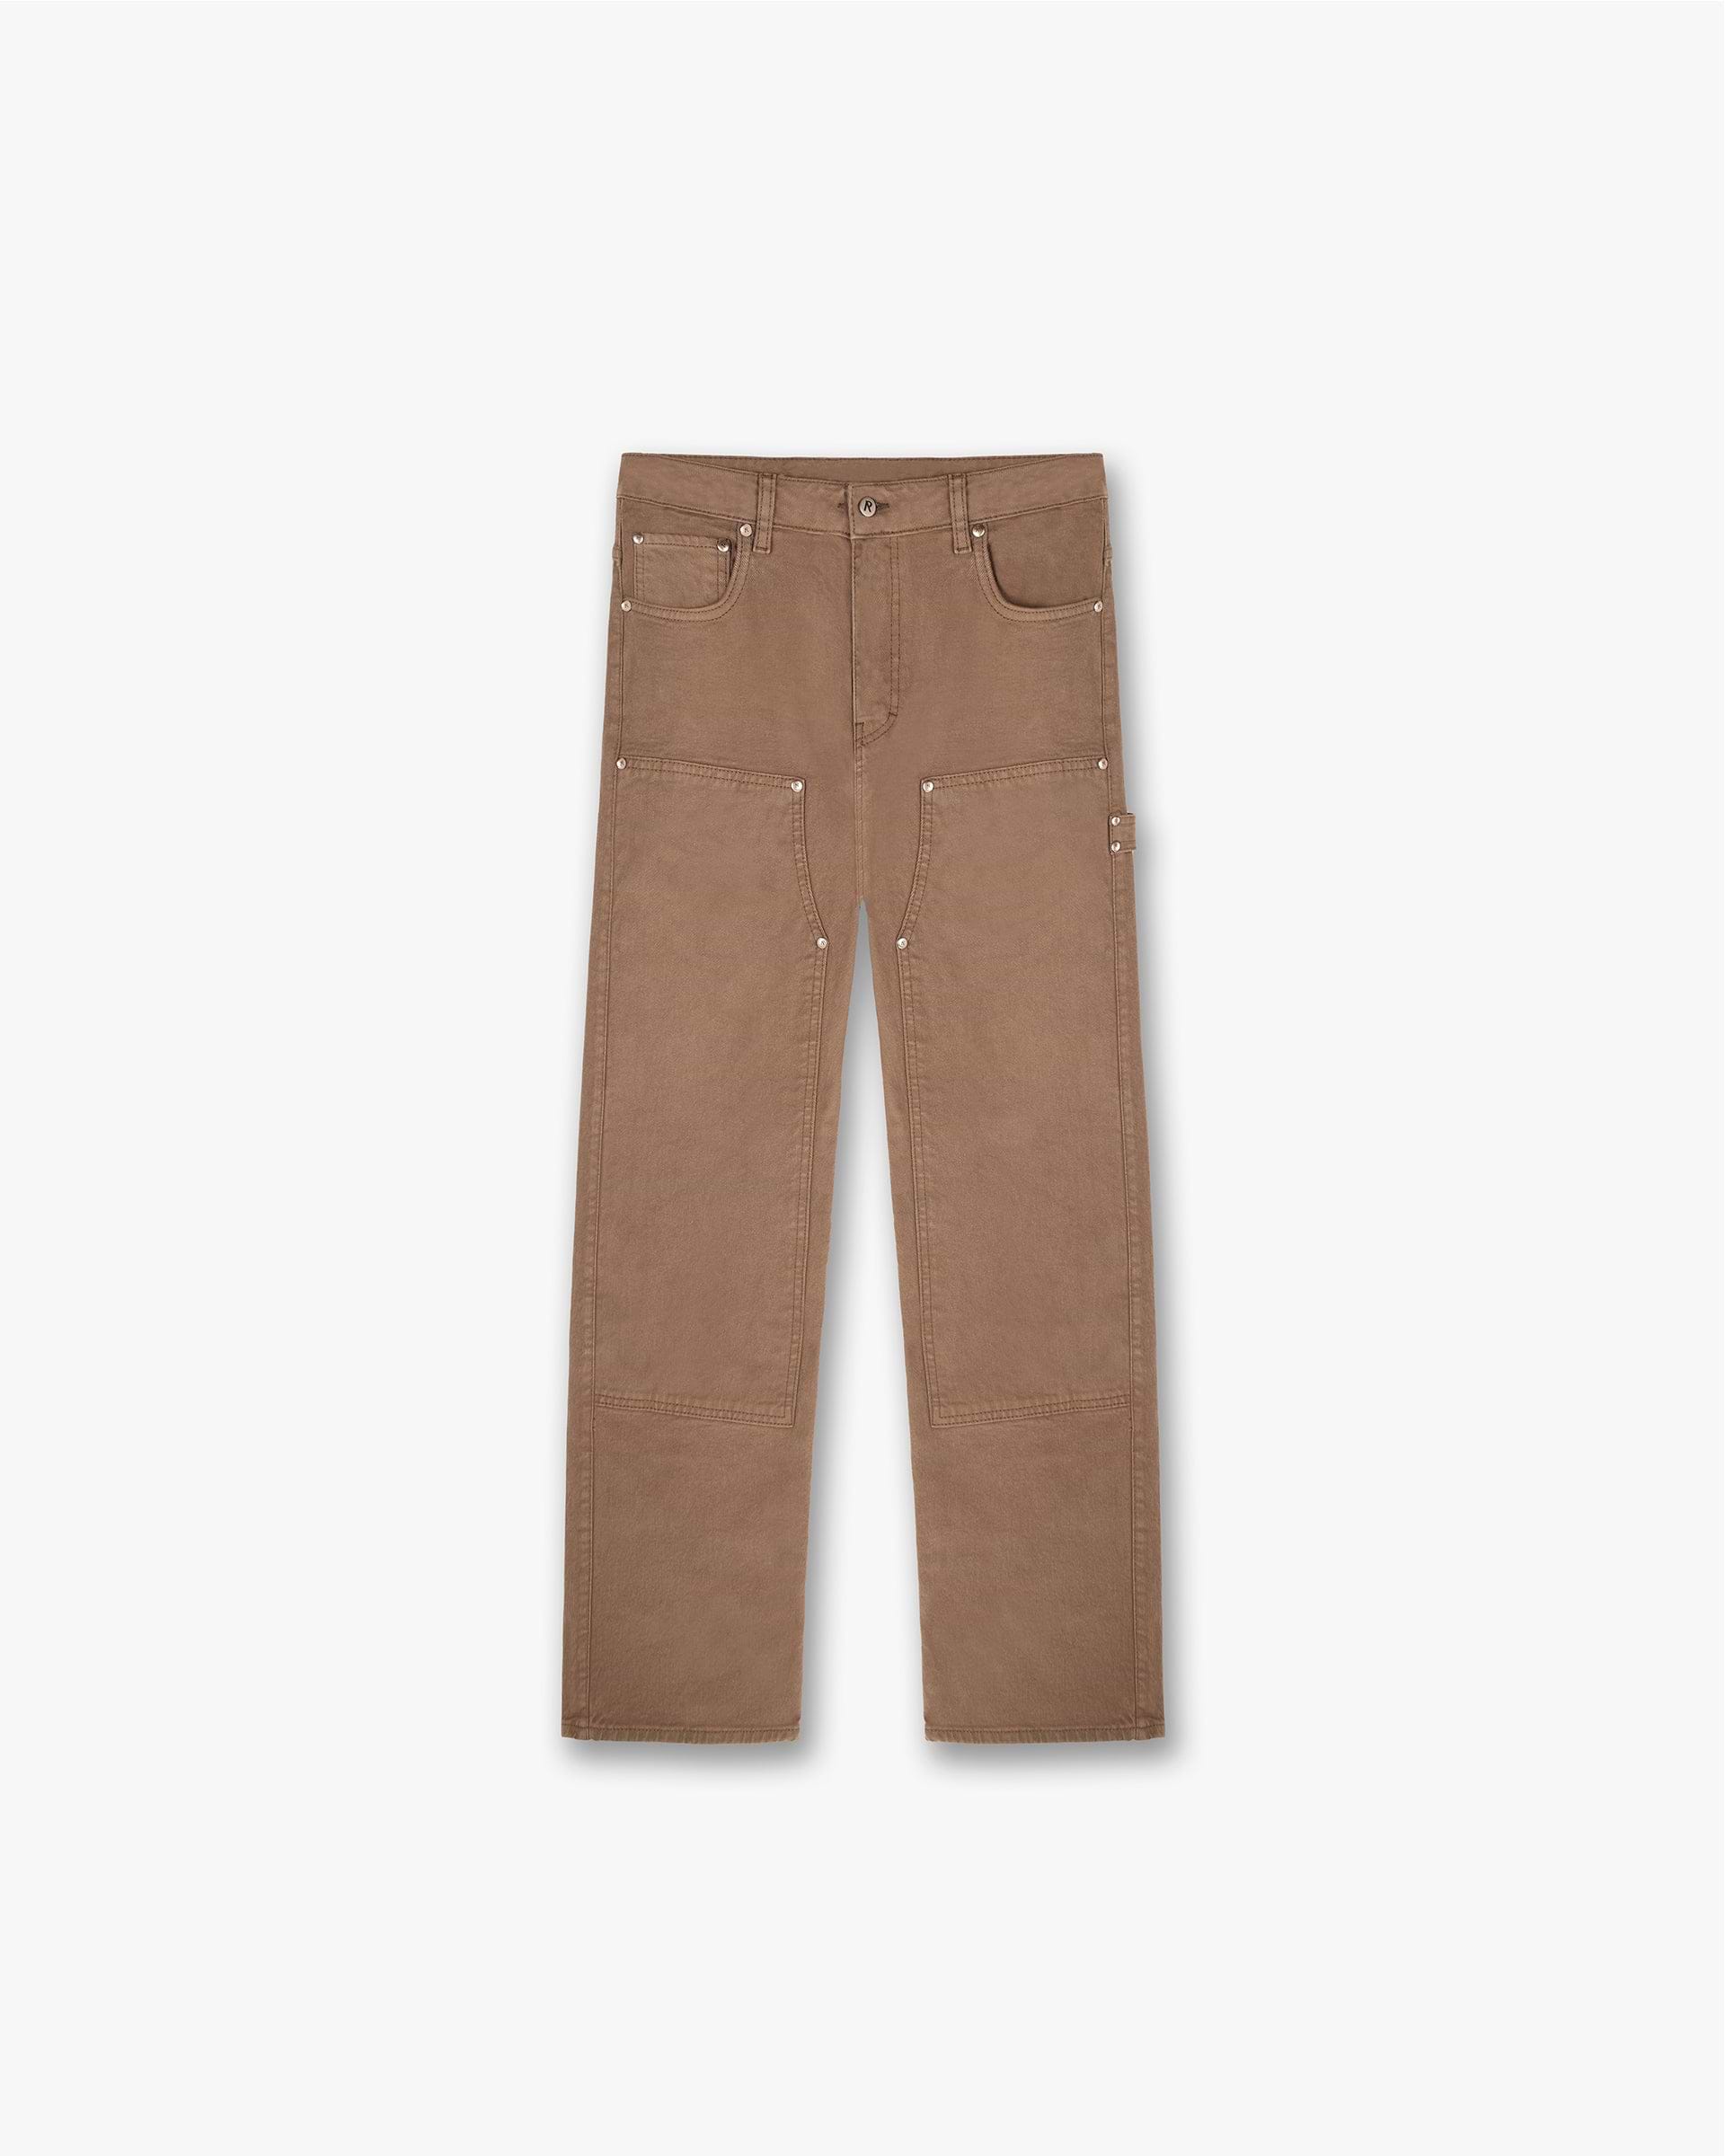 Men's Carpenter Jeans, Carpenter Pants